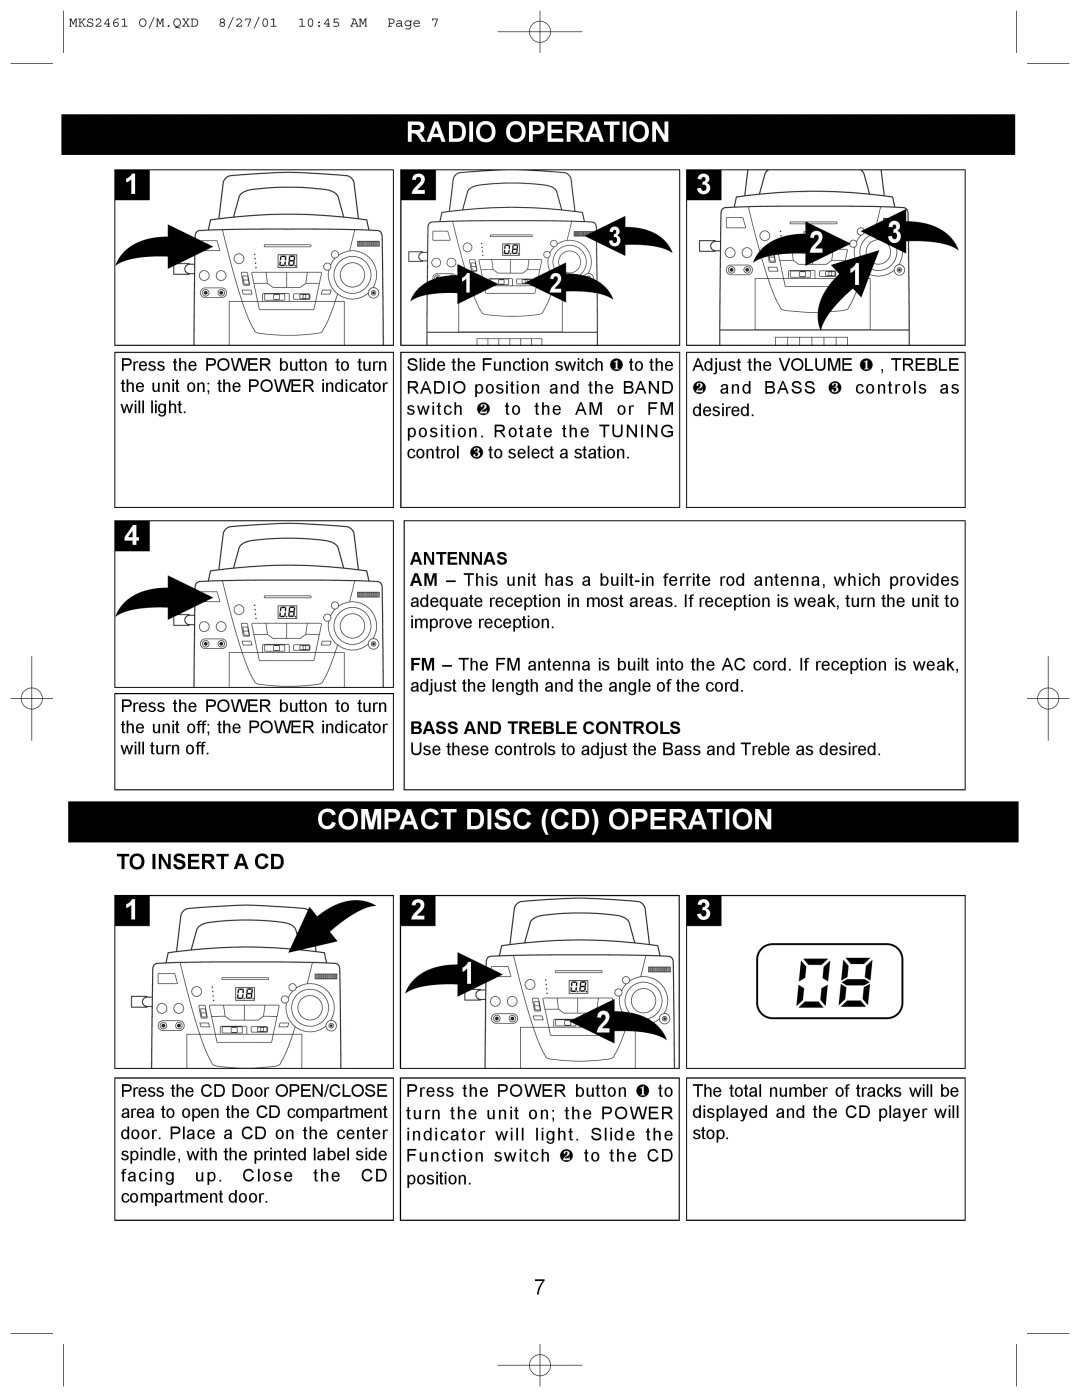 Memorex MKS2461 operating instructions Radio Operation, Compact Disc Cd Operation 